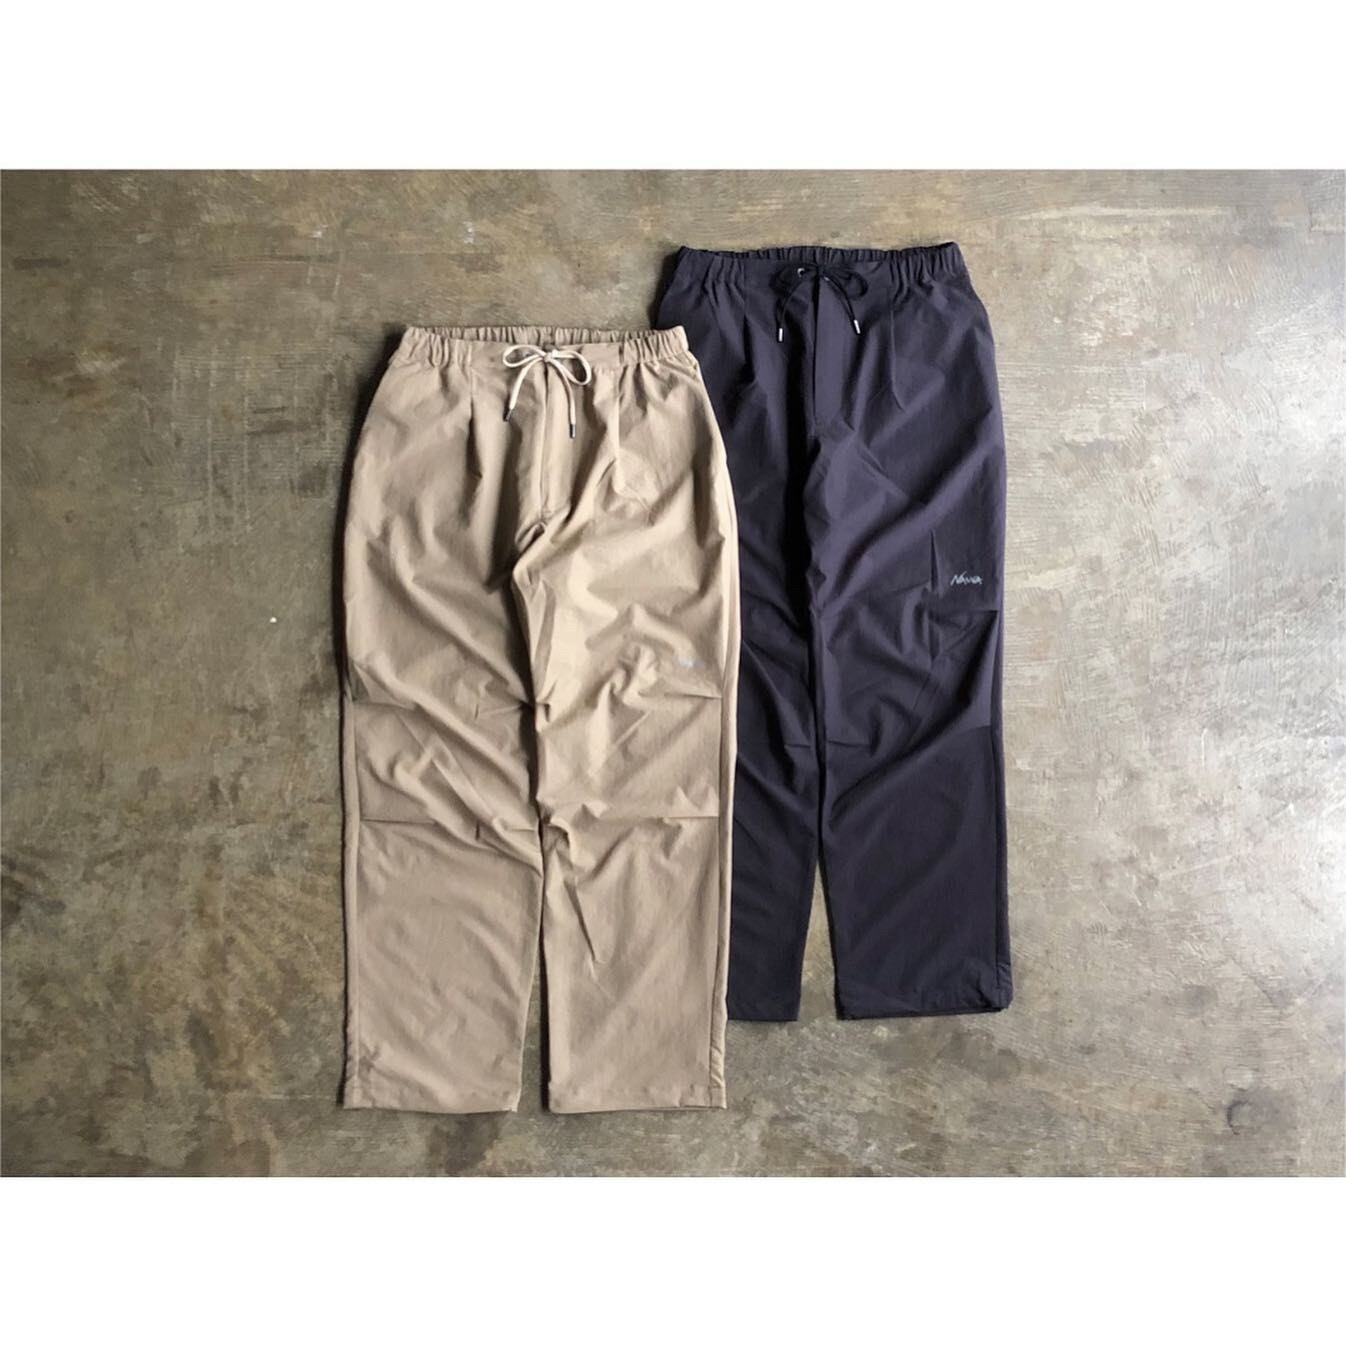 NANGA (ナンガ) Air Cloth Comfy Pants | AUTHENTIC Life Store